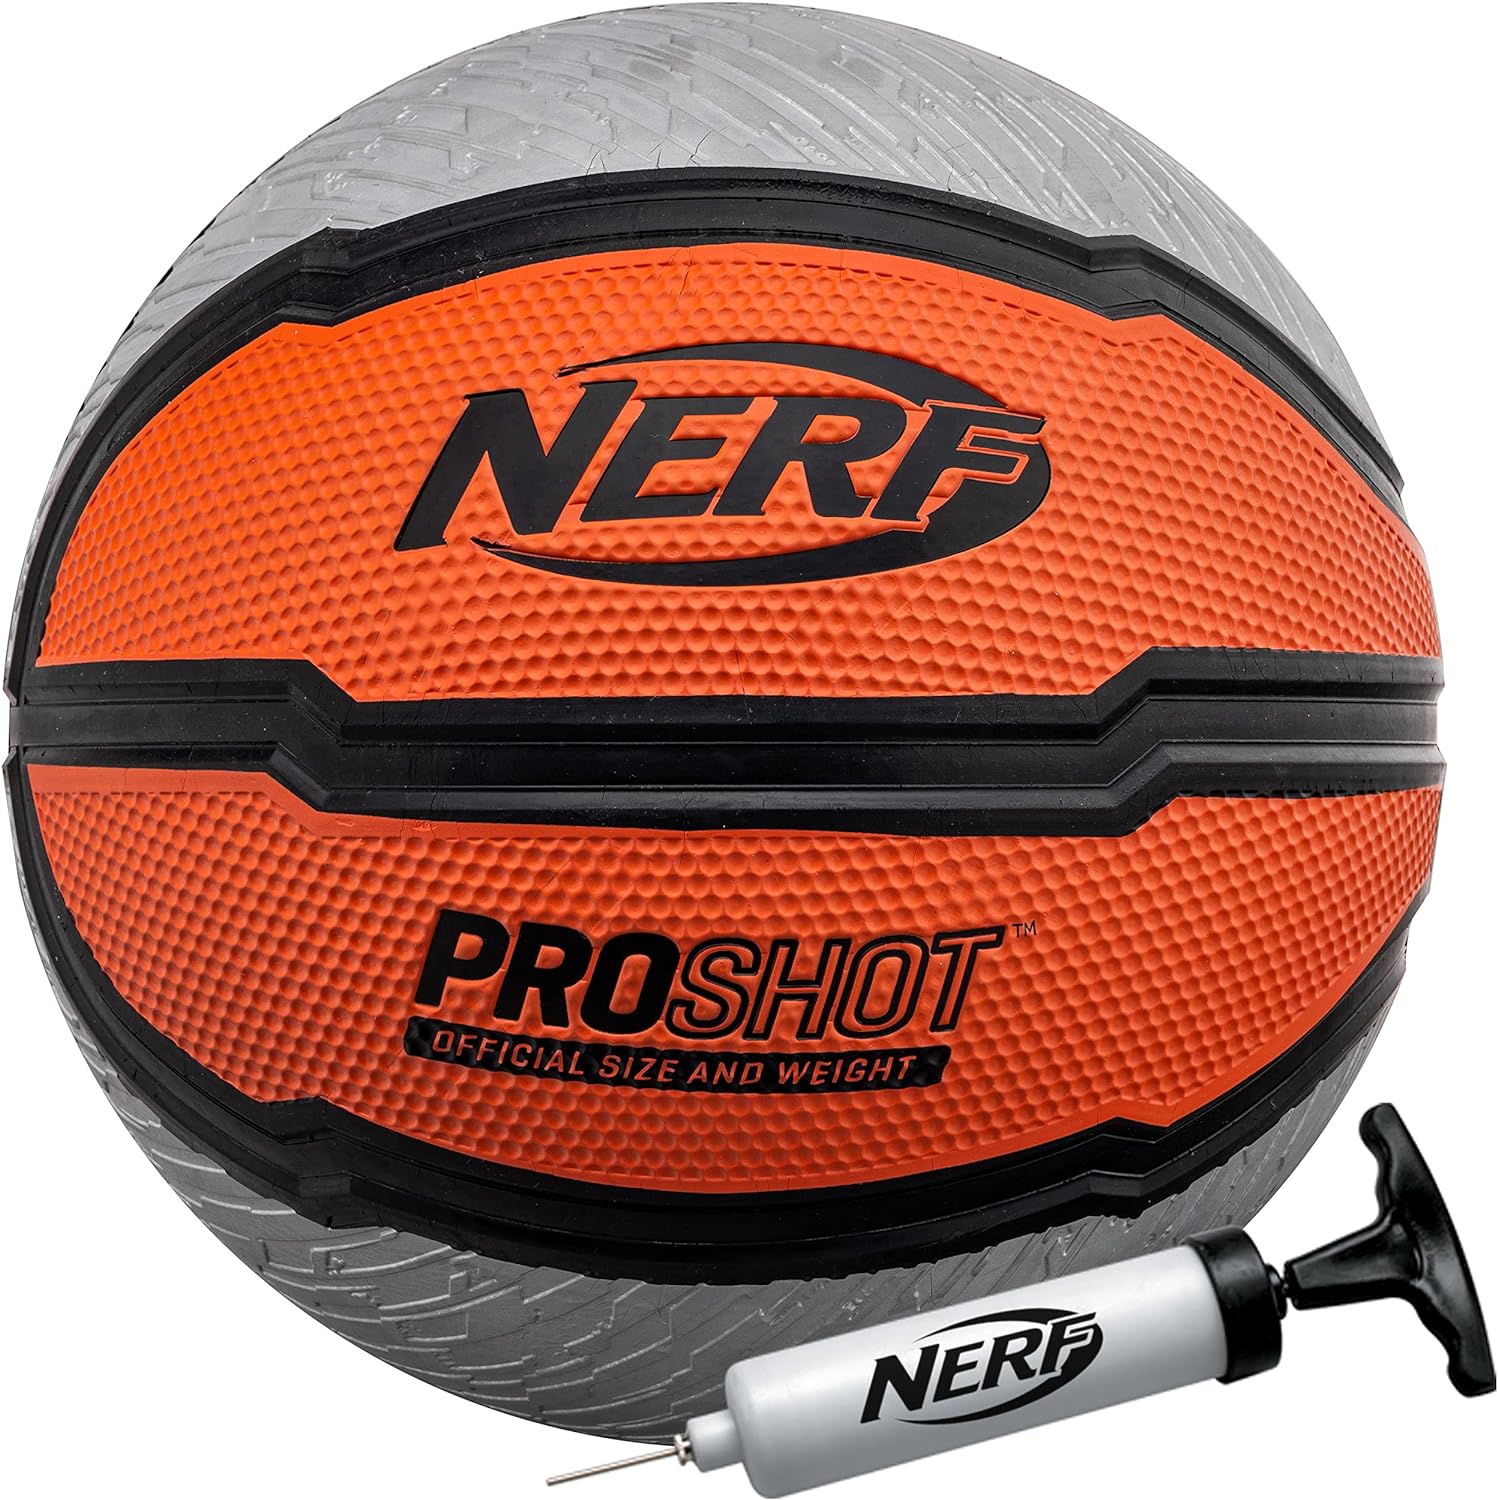 NERF Indoor + Outdoor Basketball - Proshot Official Size 29.5 Basketball + Air Inflation Pump - Extra Grip Basketball for Gym + Driveway Basketball Hoops - Regulation B7 Basketball - Black/Orange